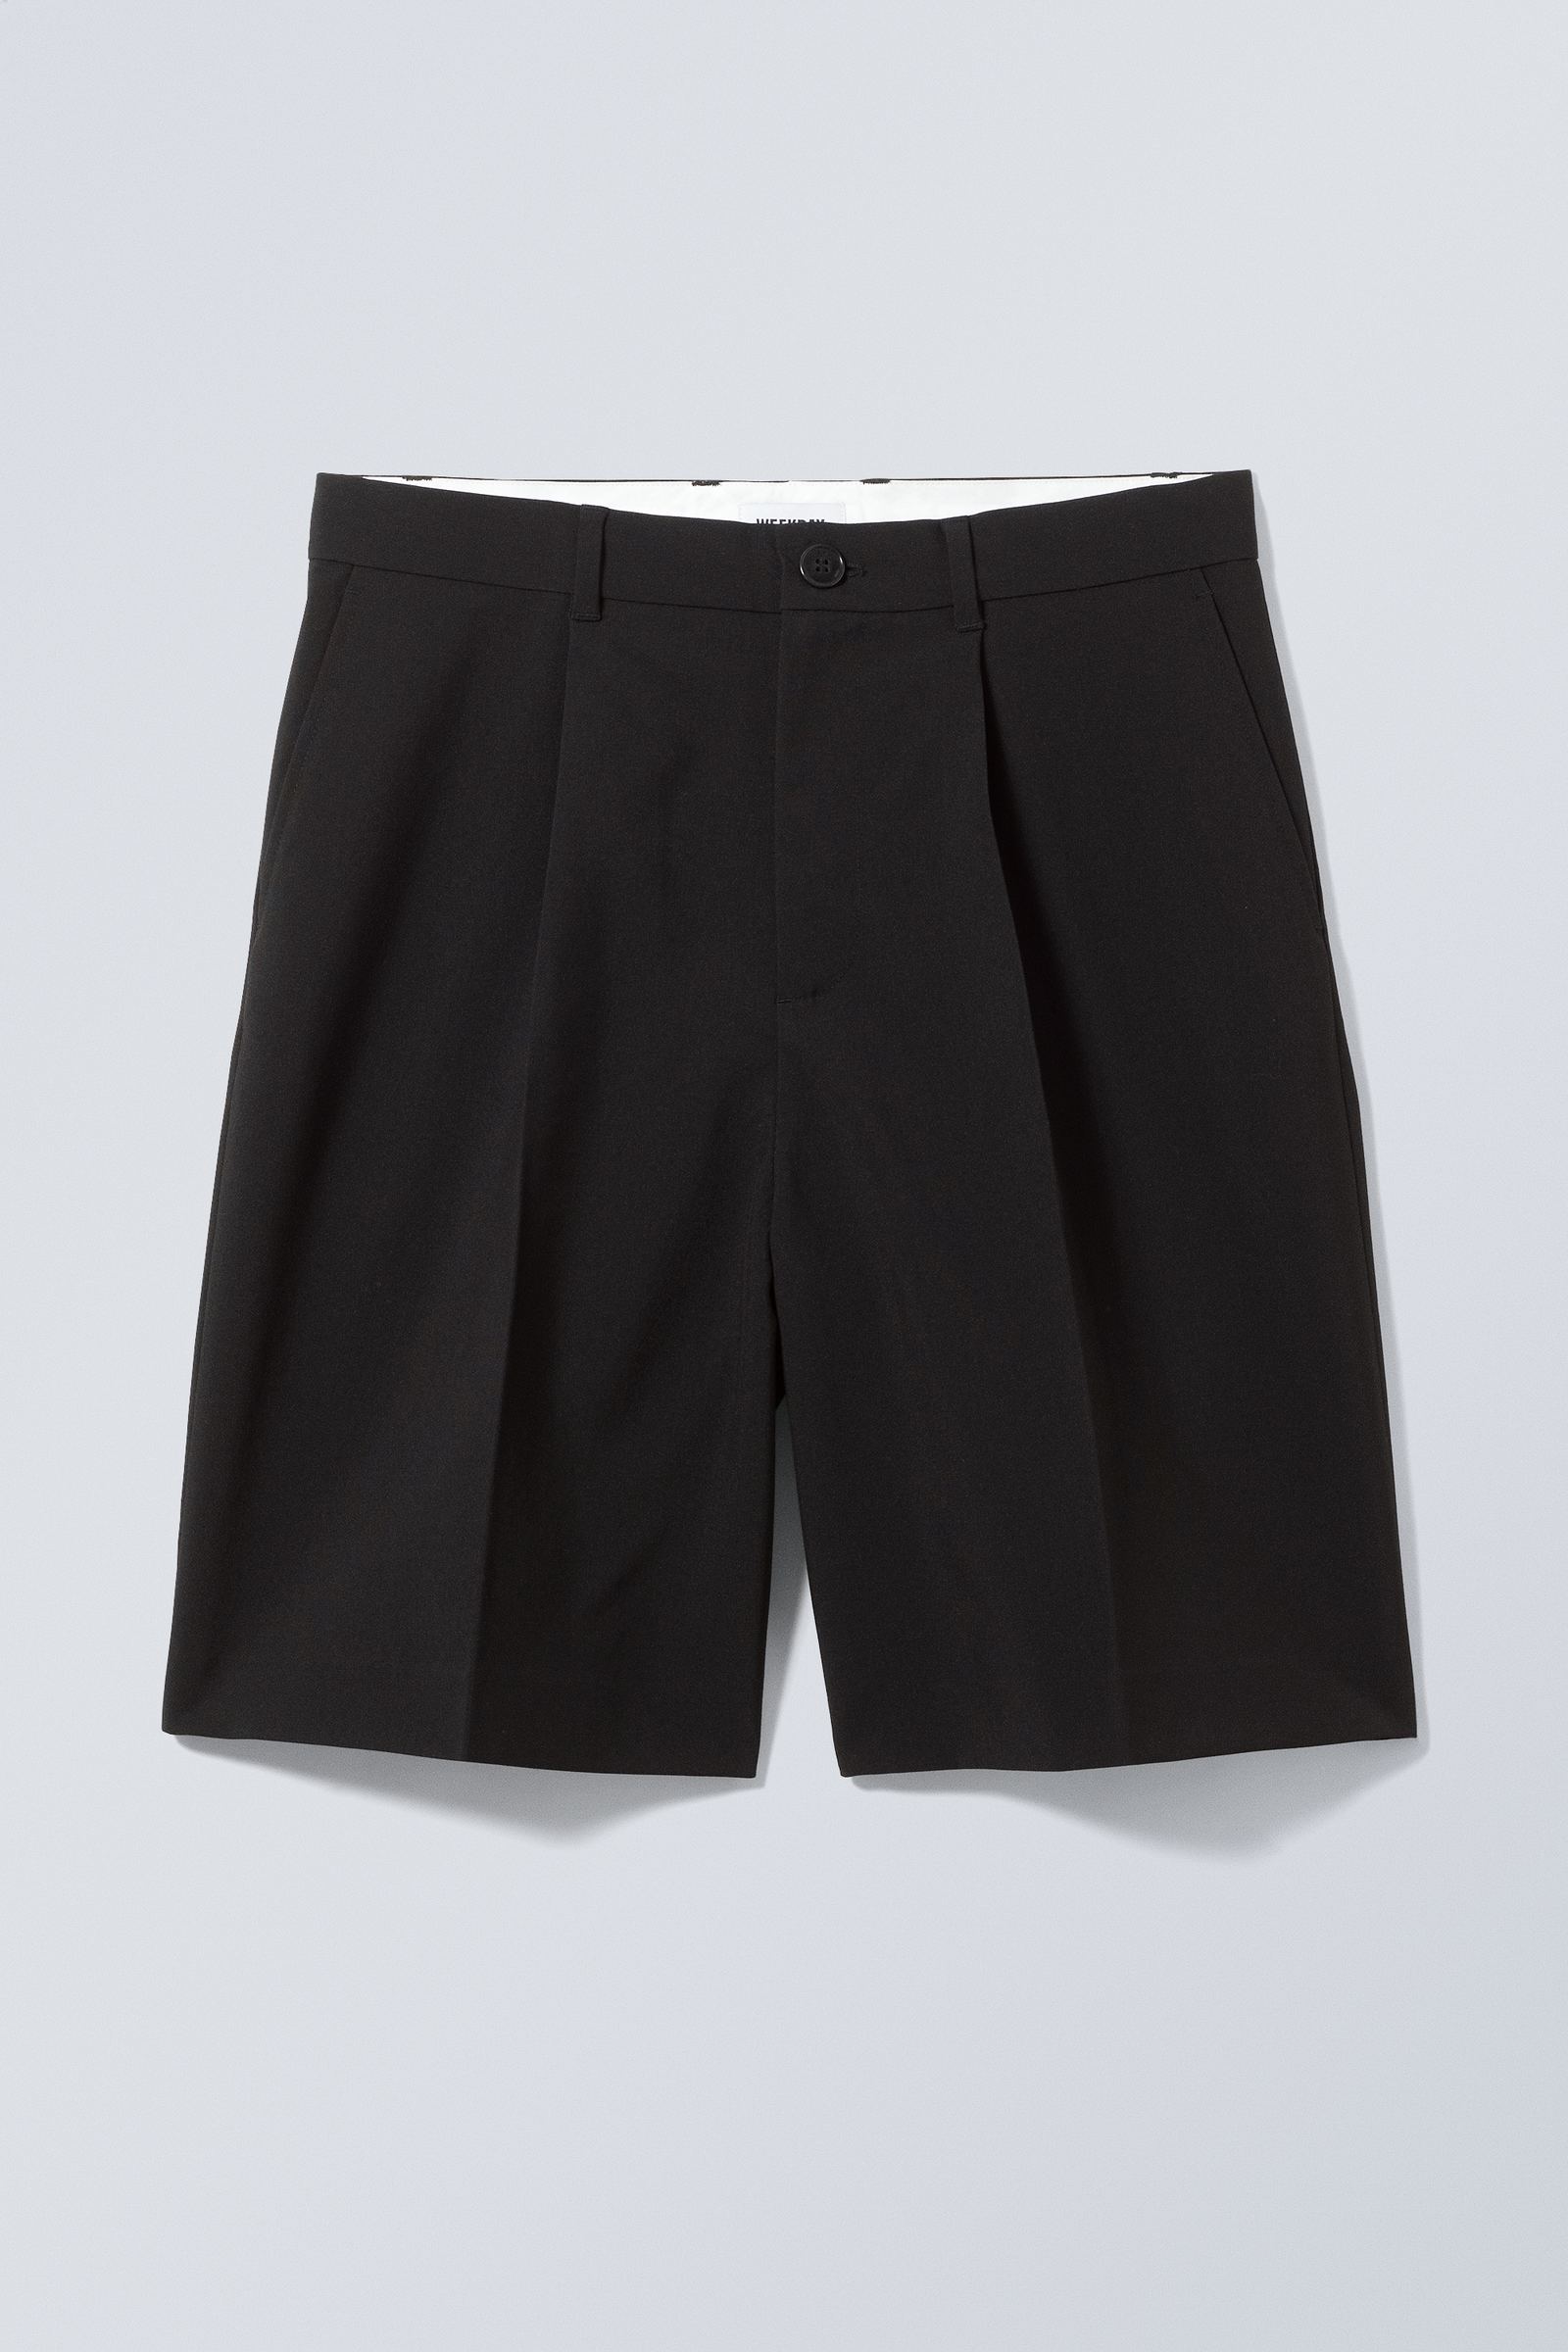 #272628 - Uno Oversized Suit Shorts - 1